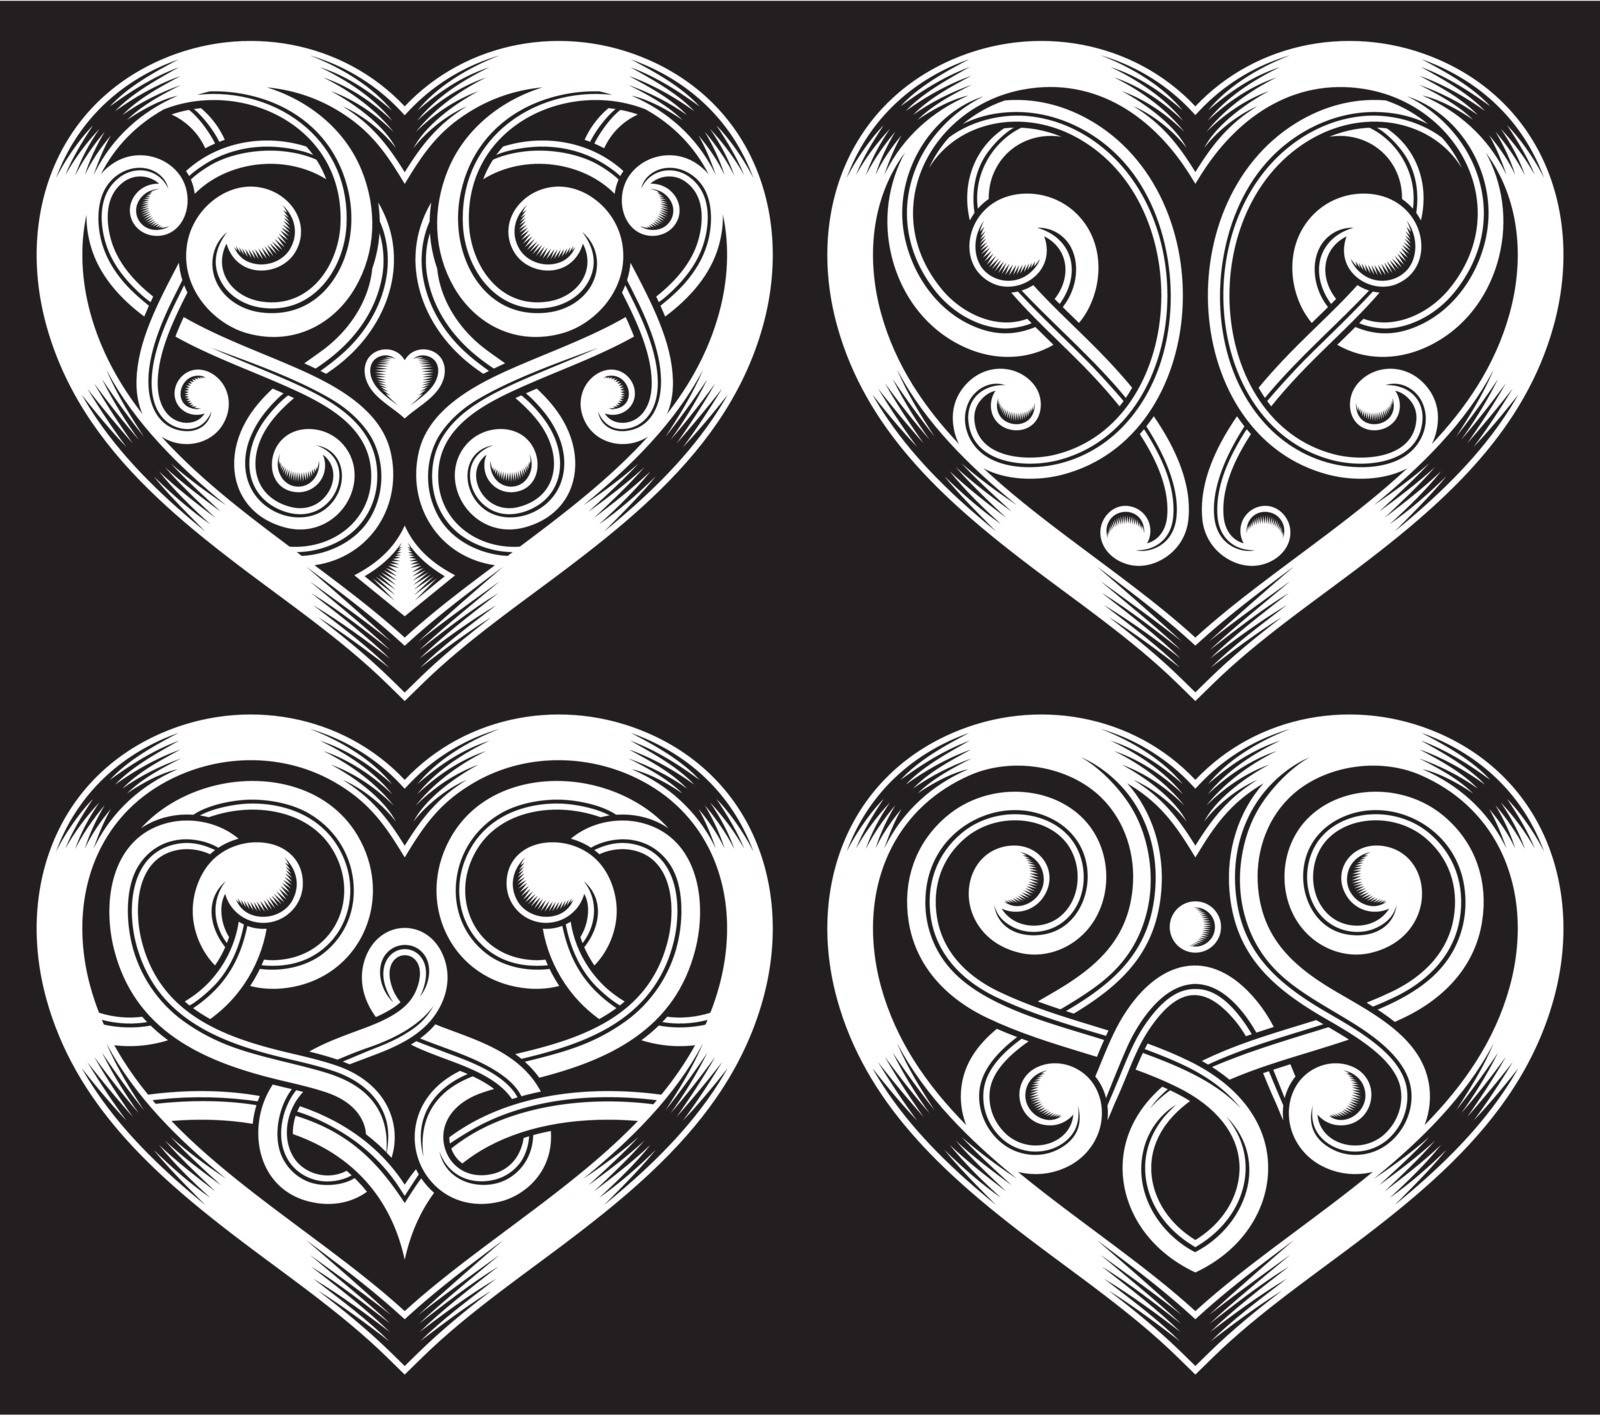 fully editable vector illustration of ornate  heart shape set on isolated black background, image suitable for design elements, emblem, insignia, logo or tattoo